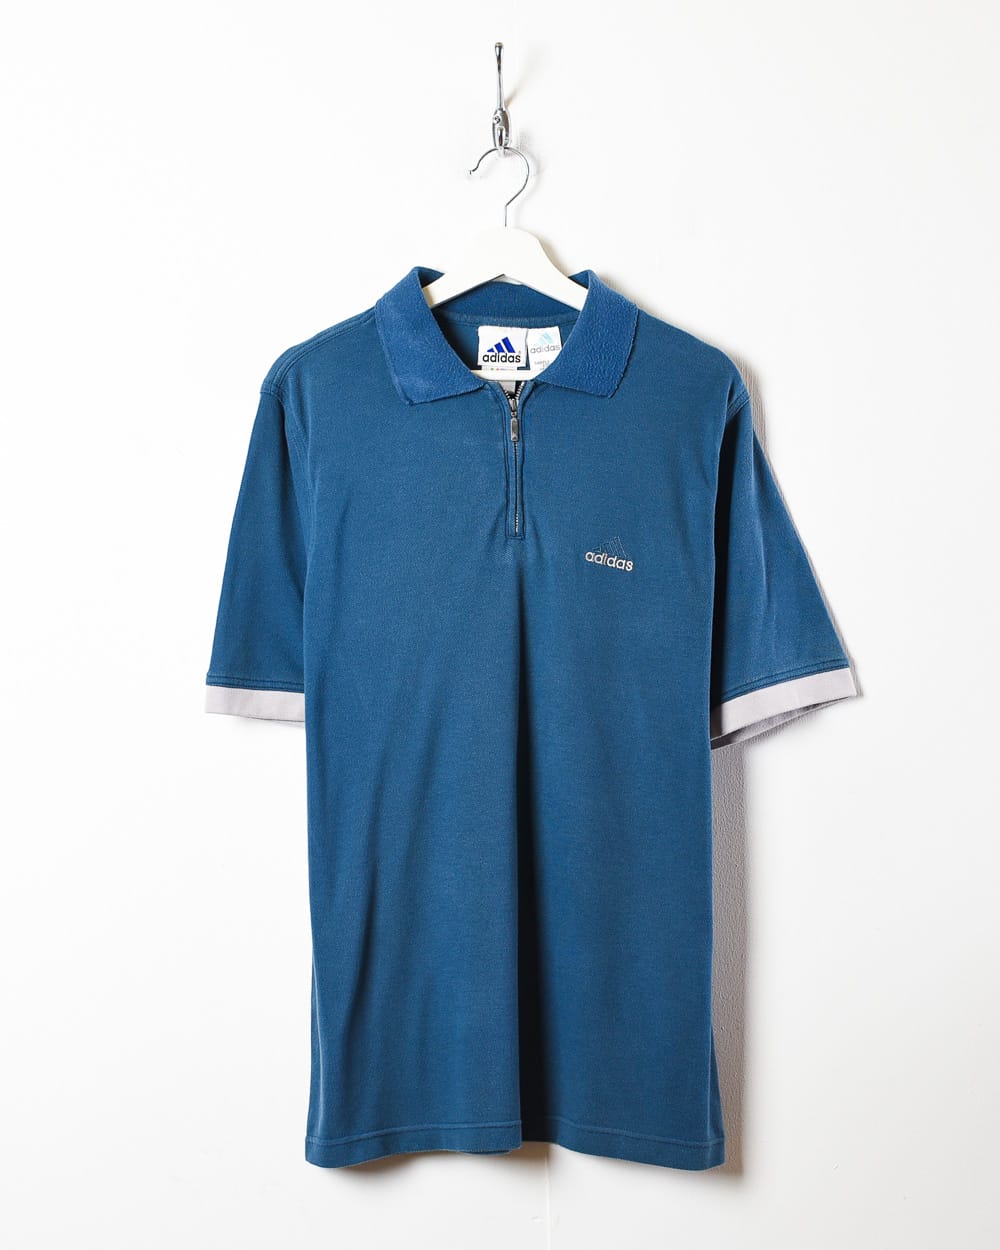 Navy Adidas 1/4 Zip Polo Shirt - Medium